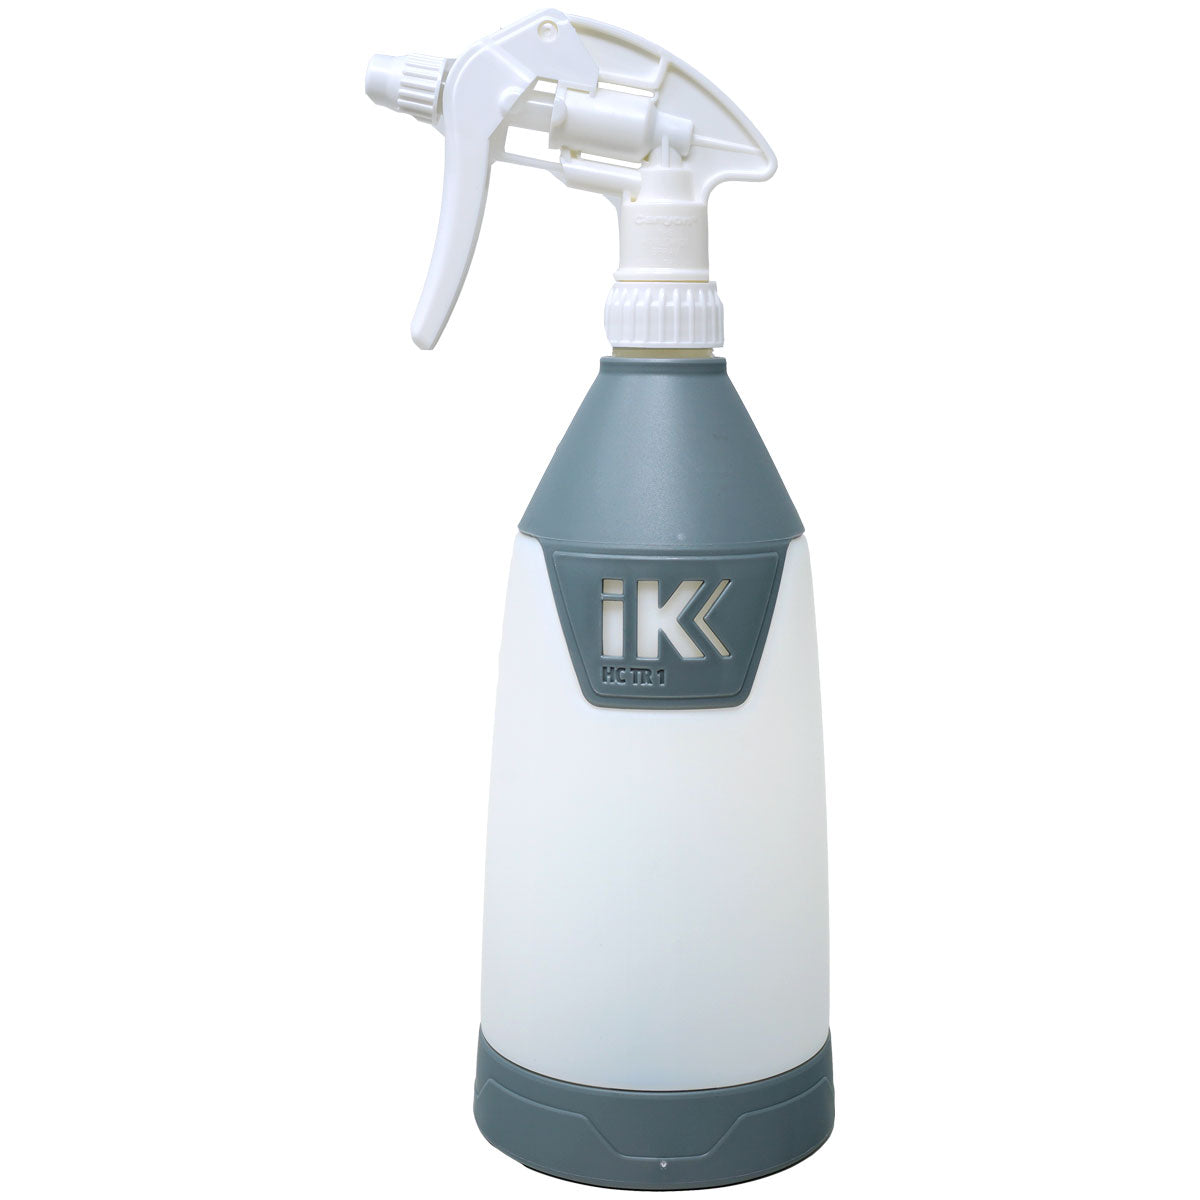 IK Sprayer Heavy Duty HC TR 1 - 1 Litre Sprayer